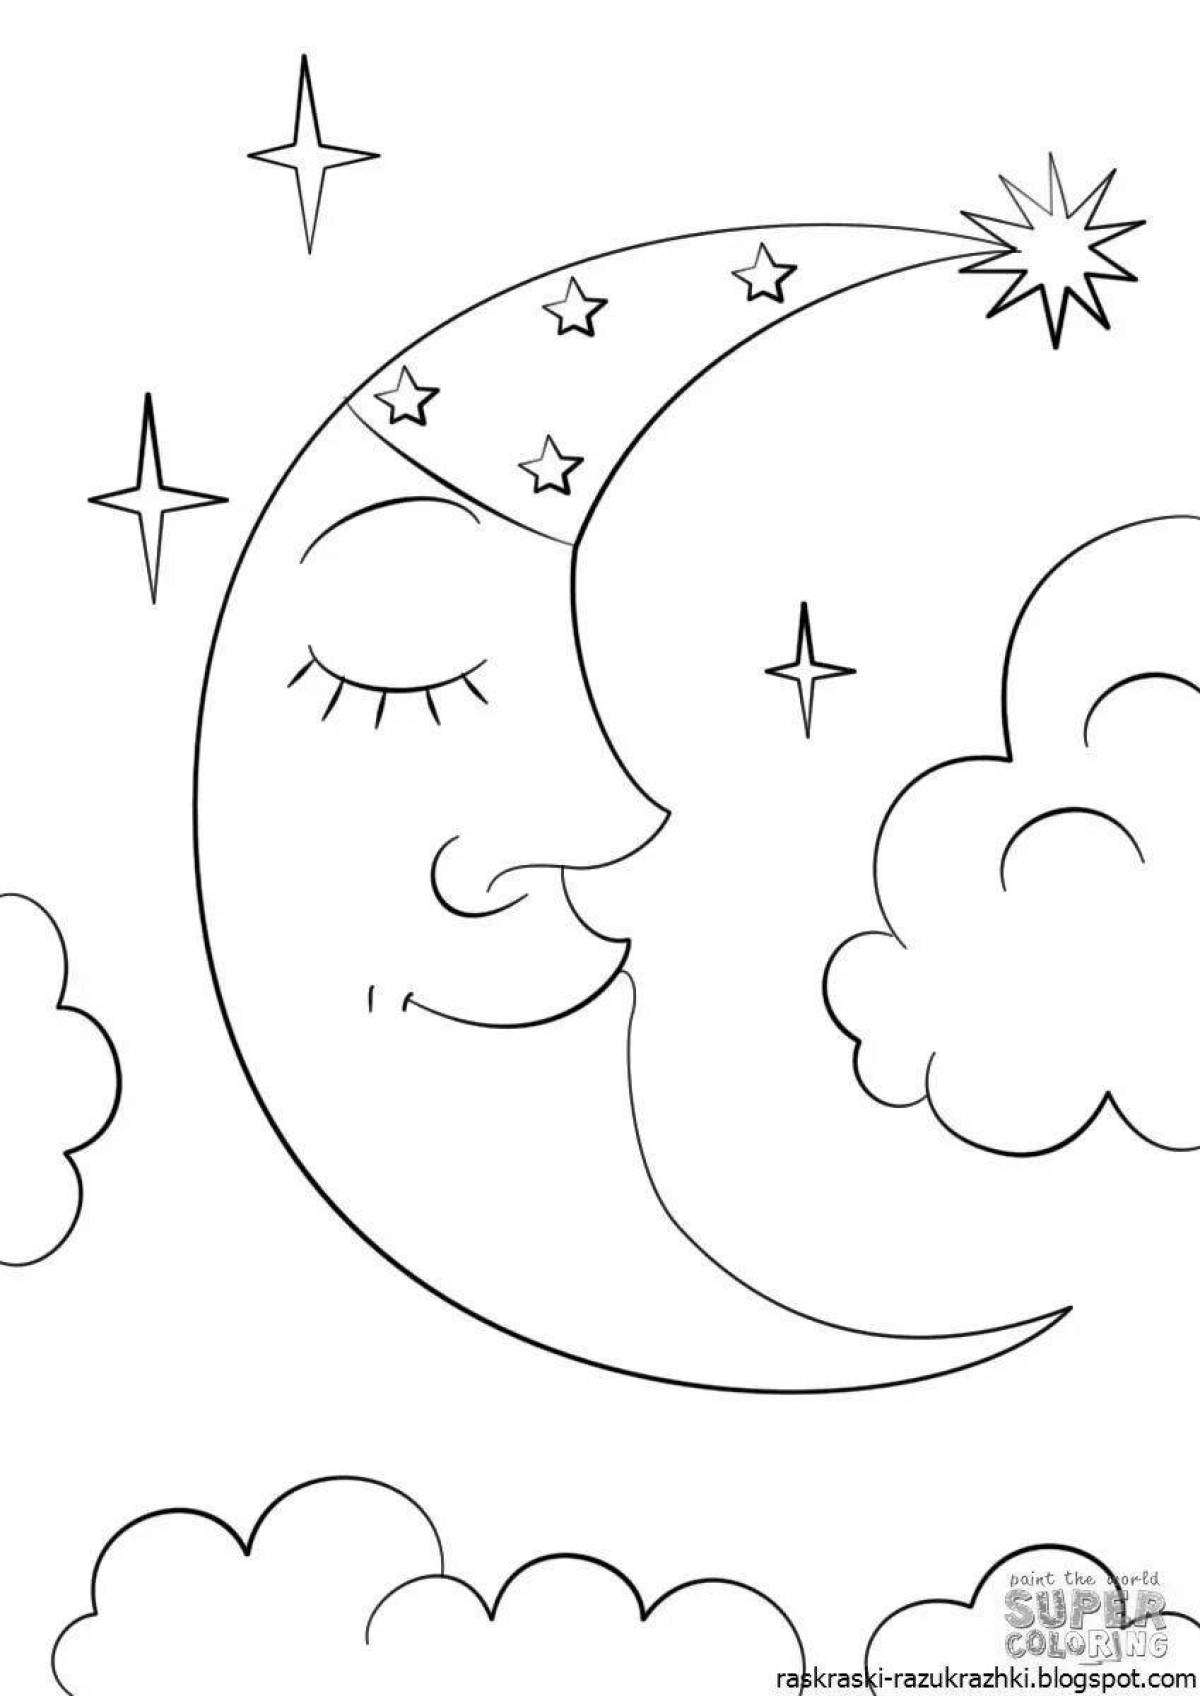 Joyful moon coloring for kids